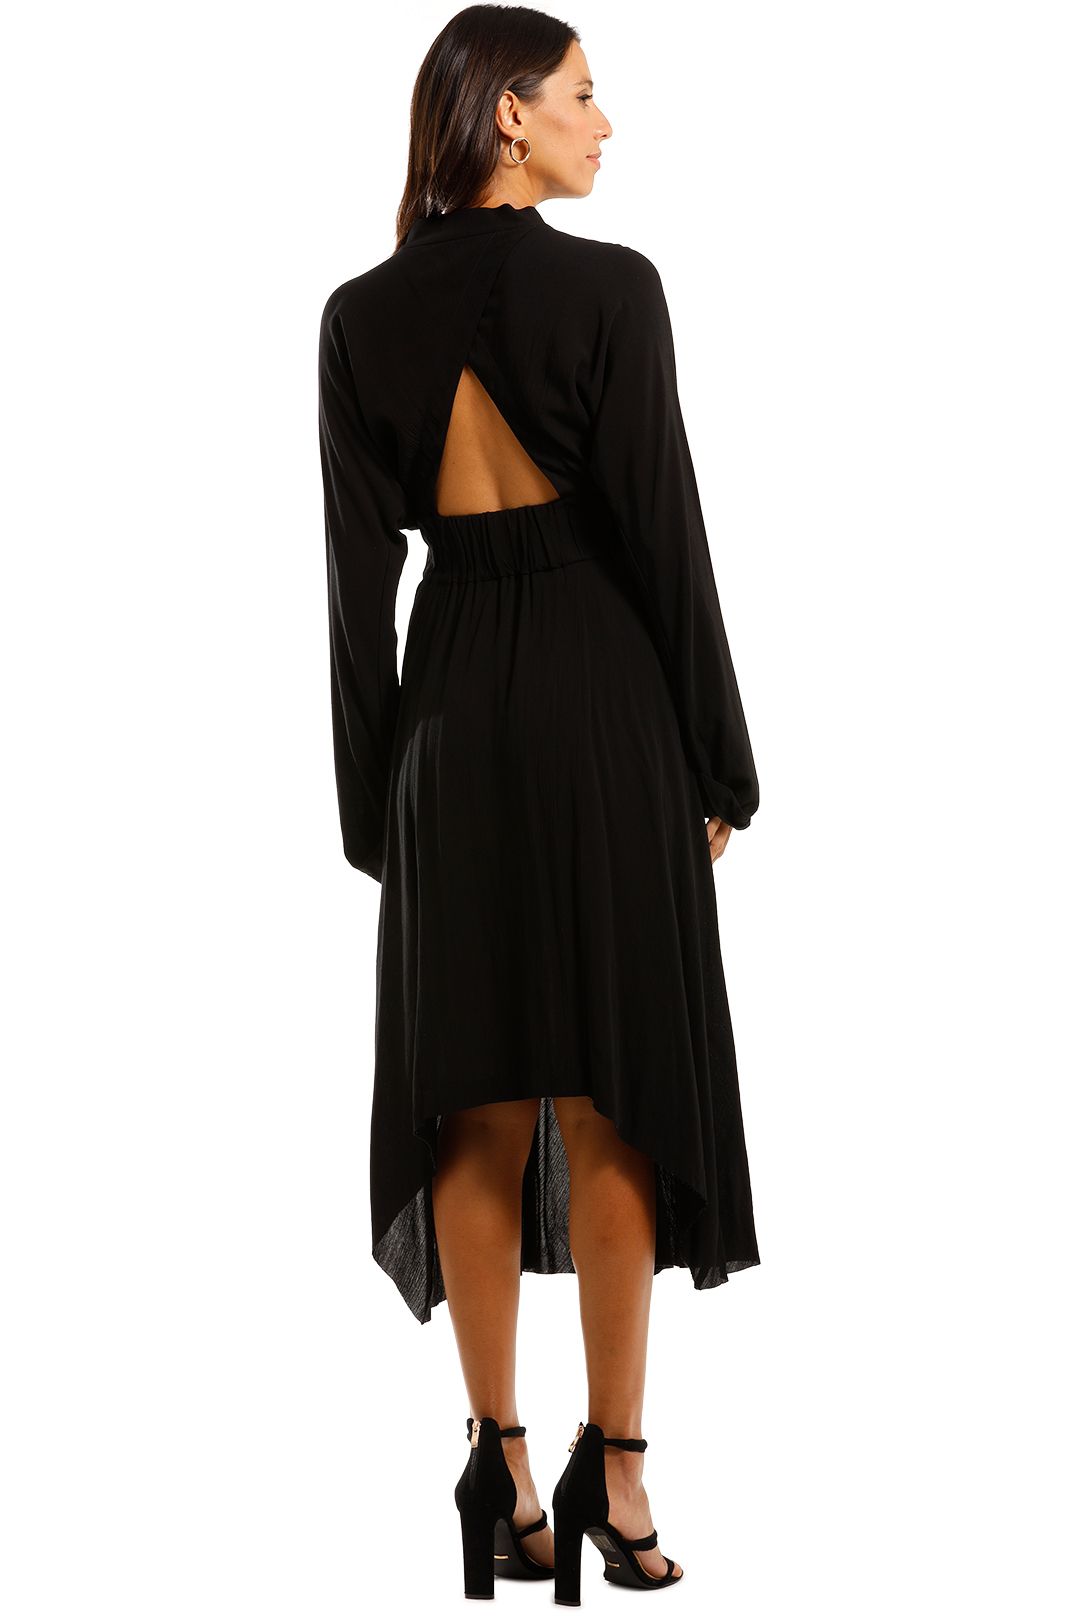 KITX Shirt Dress Black Midi Drape Dress Plunge V Neckline